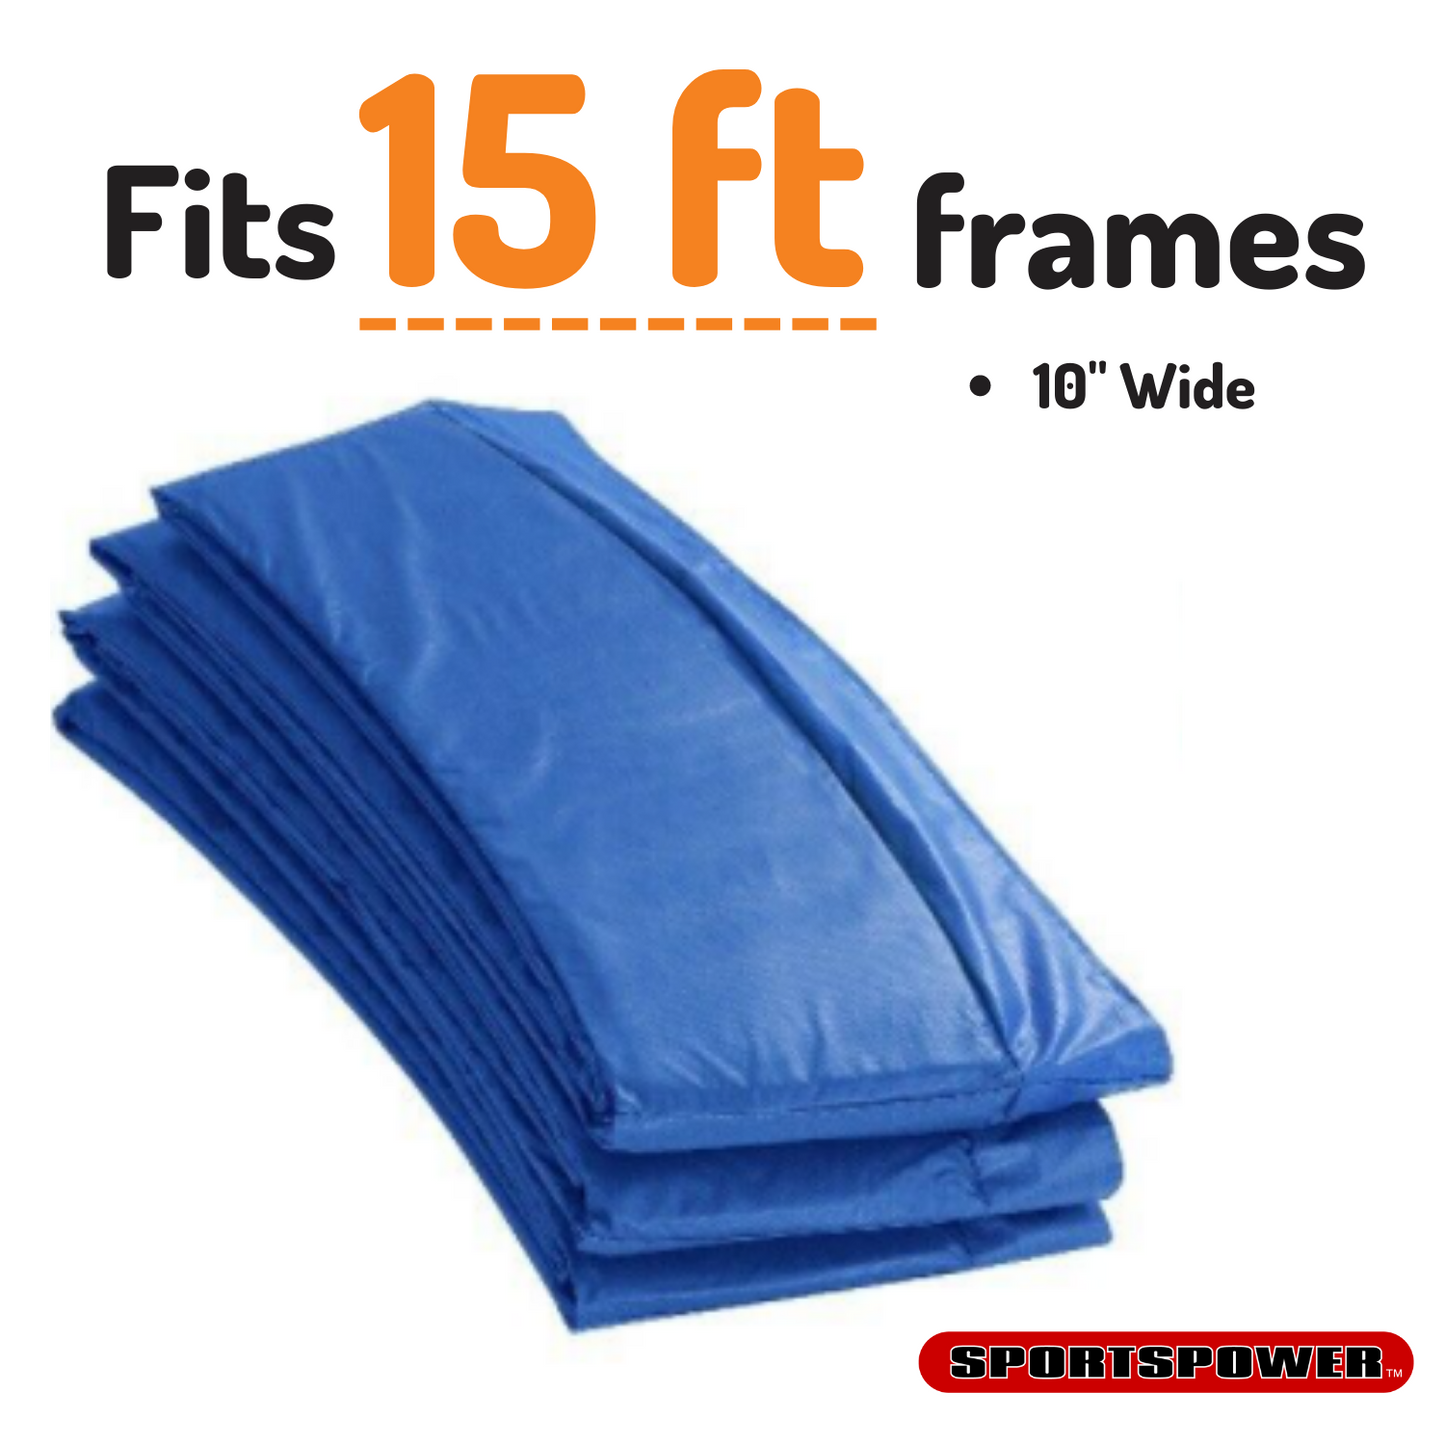 Round Frame Pad for 15’, 10” Wide | Flex